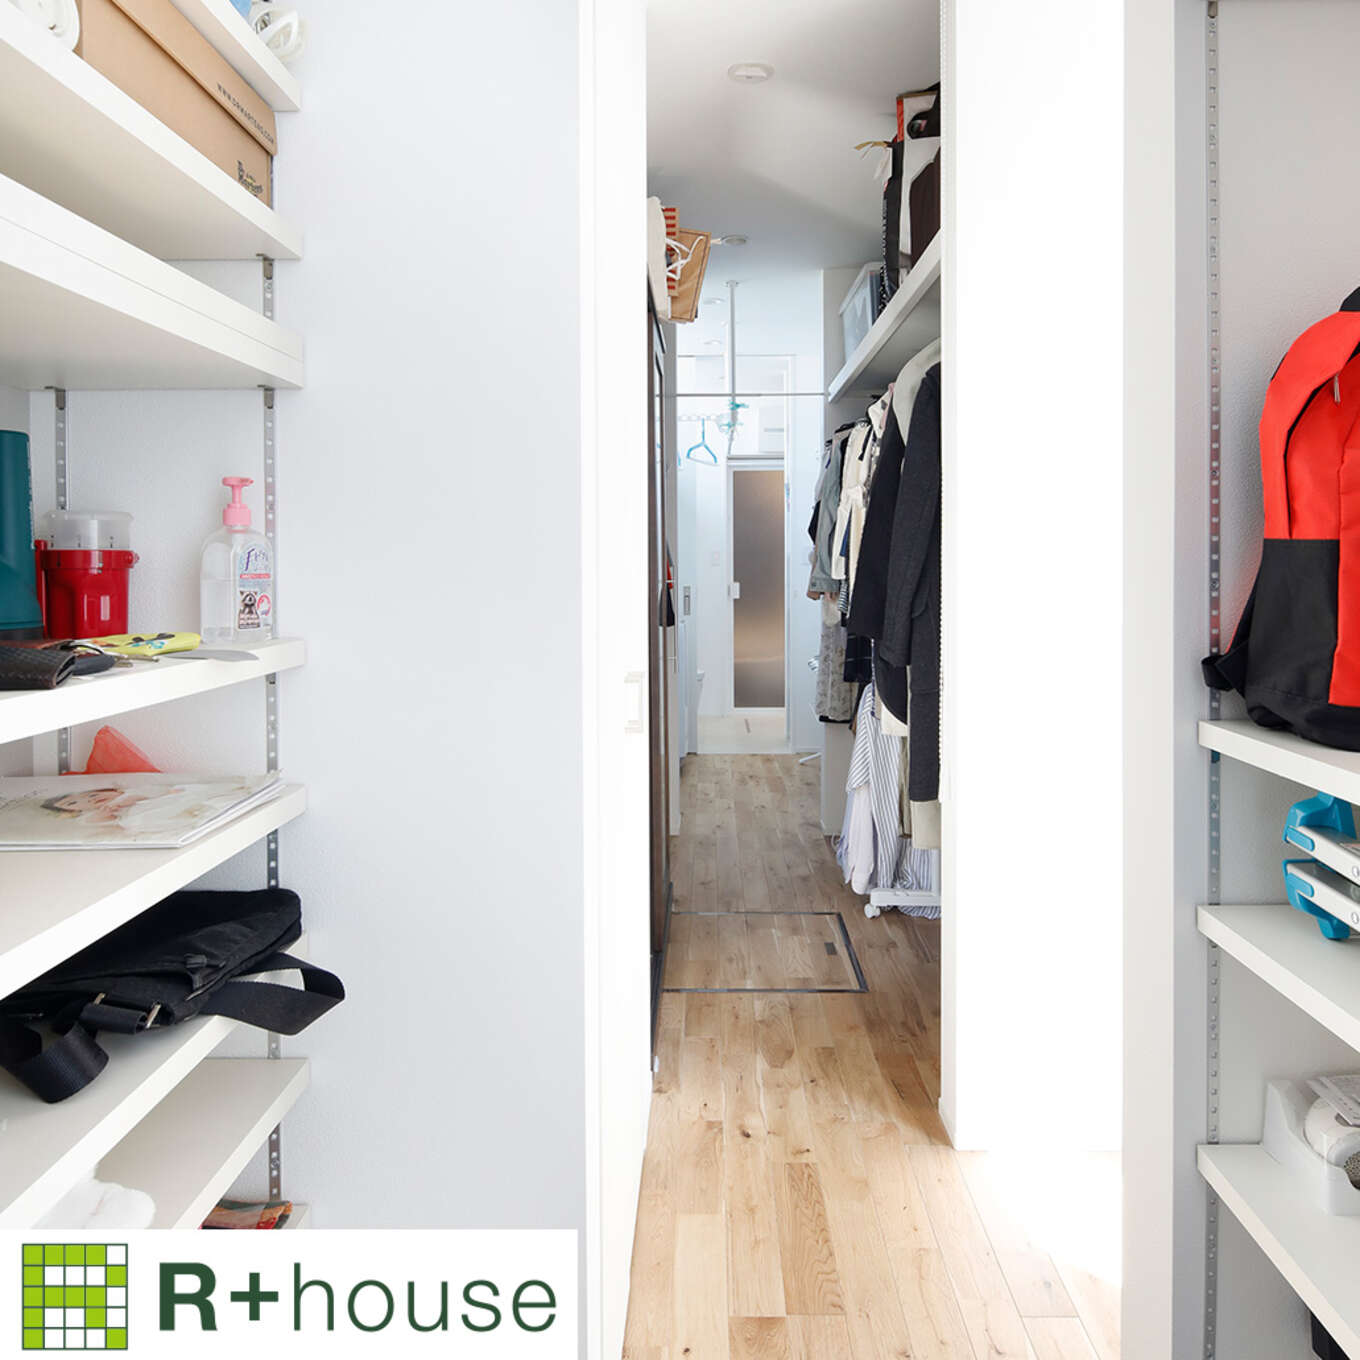 R+houseの物件のシューズインクローゼットの写真です。シューズインクローゼットの奥にはウォークインクローゼット、洗濯兼家事室、トイレ浴室洗面へと一直線に結ばれている。